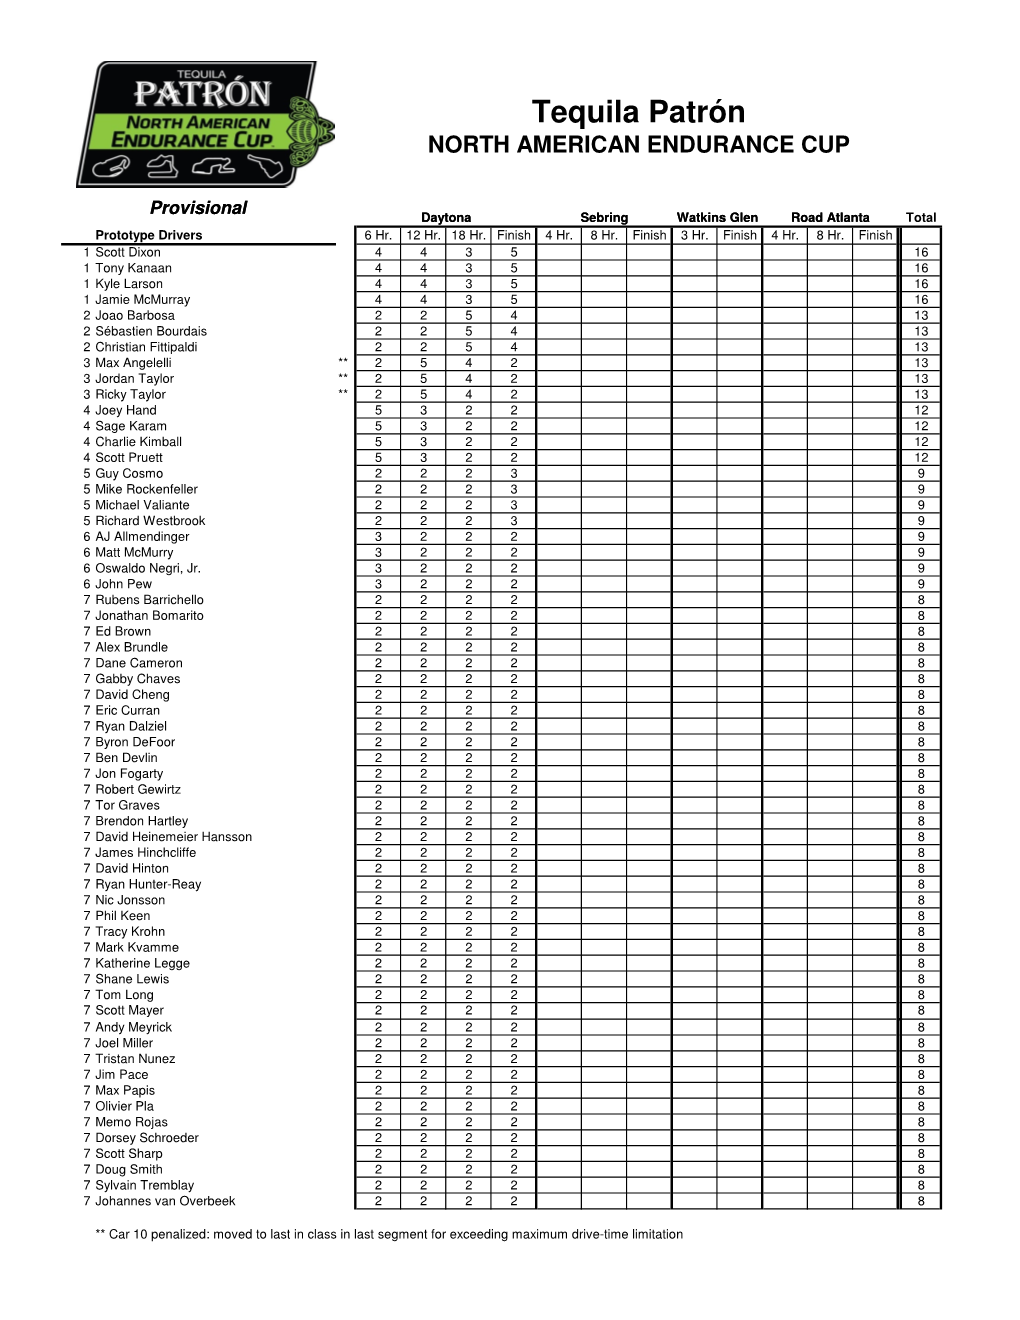 2015 TPNAEC Points Standings After Daytona